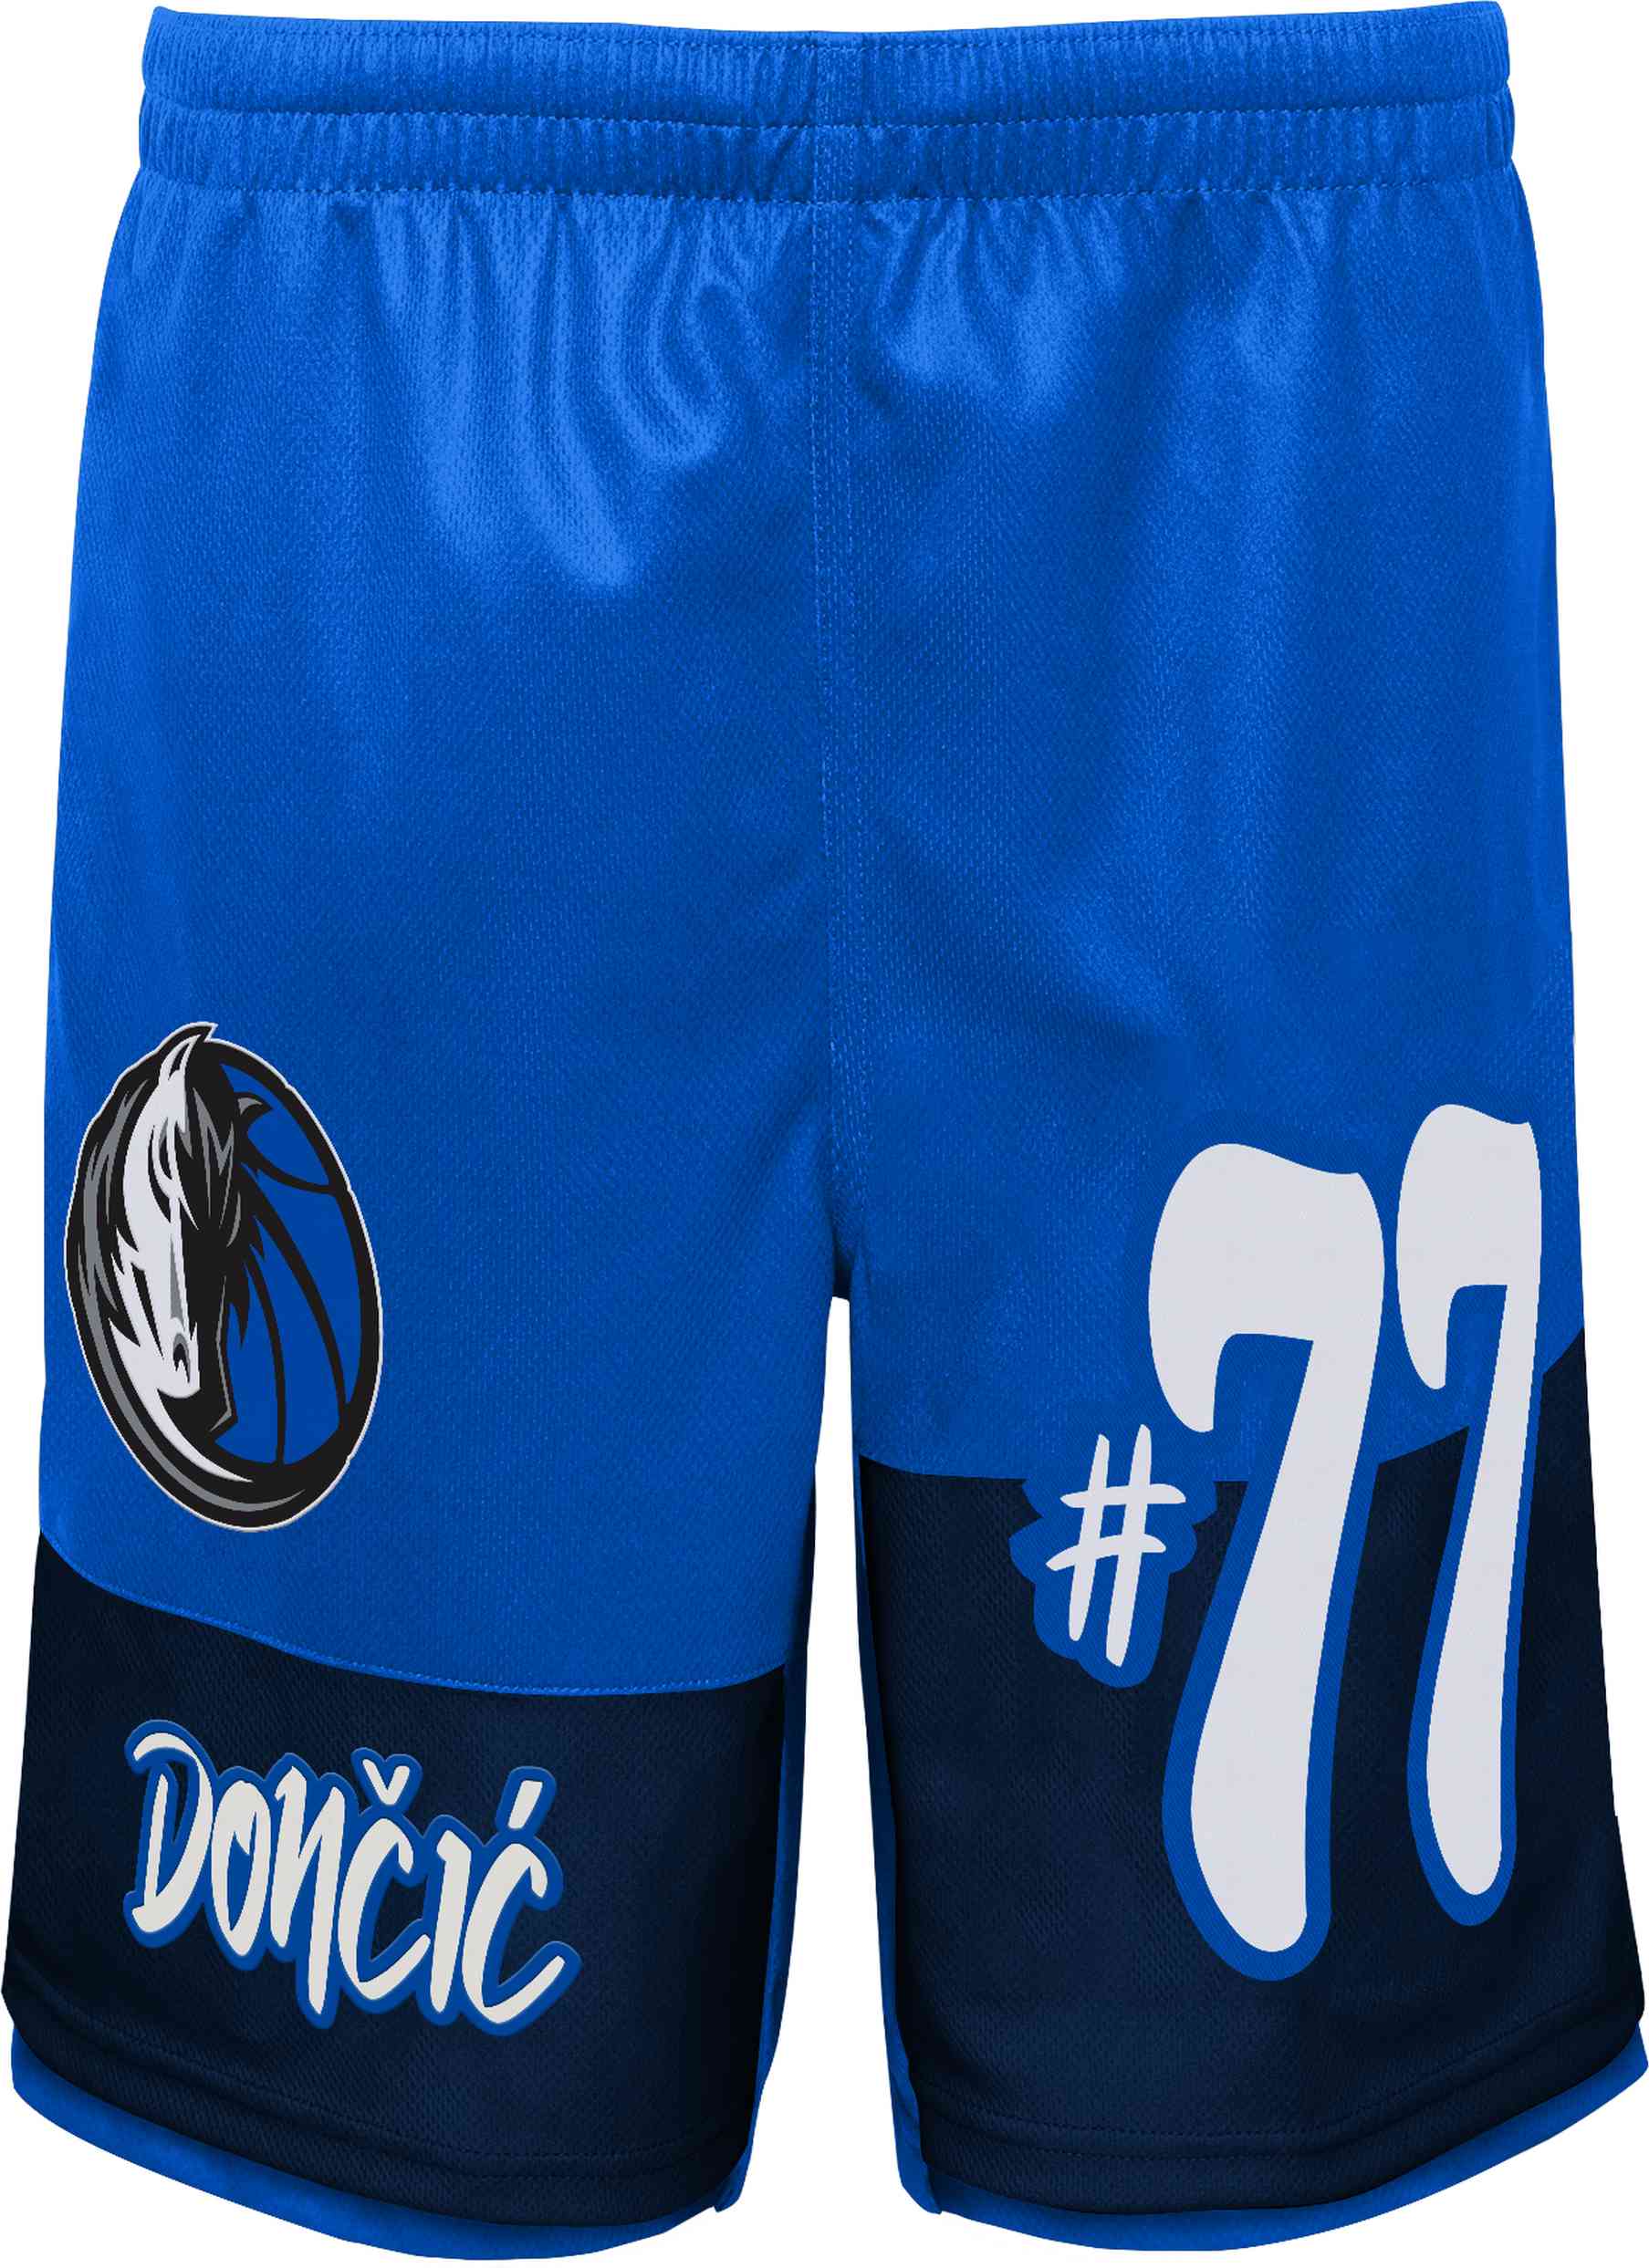 Outerstuff - NBA Dallas Mavericks Pandemonium N&N Doncic Shorts